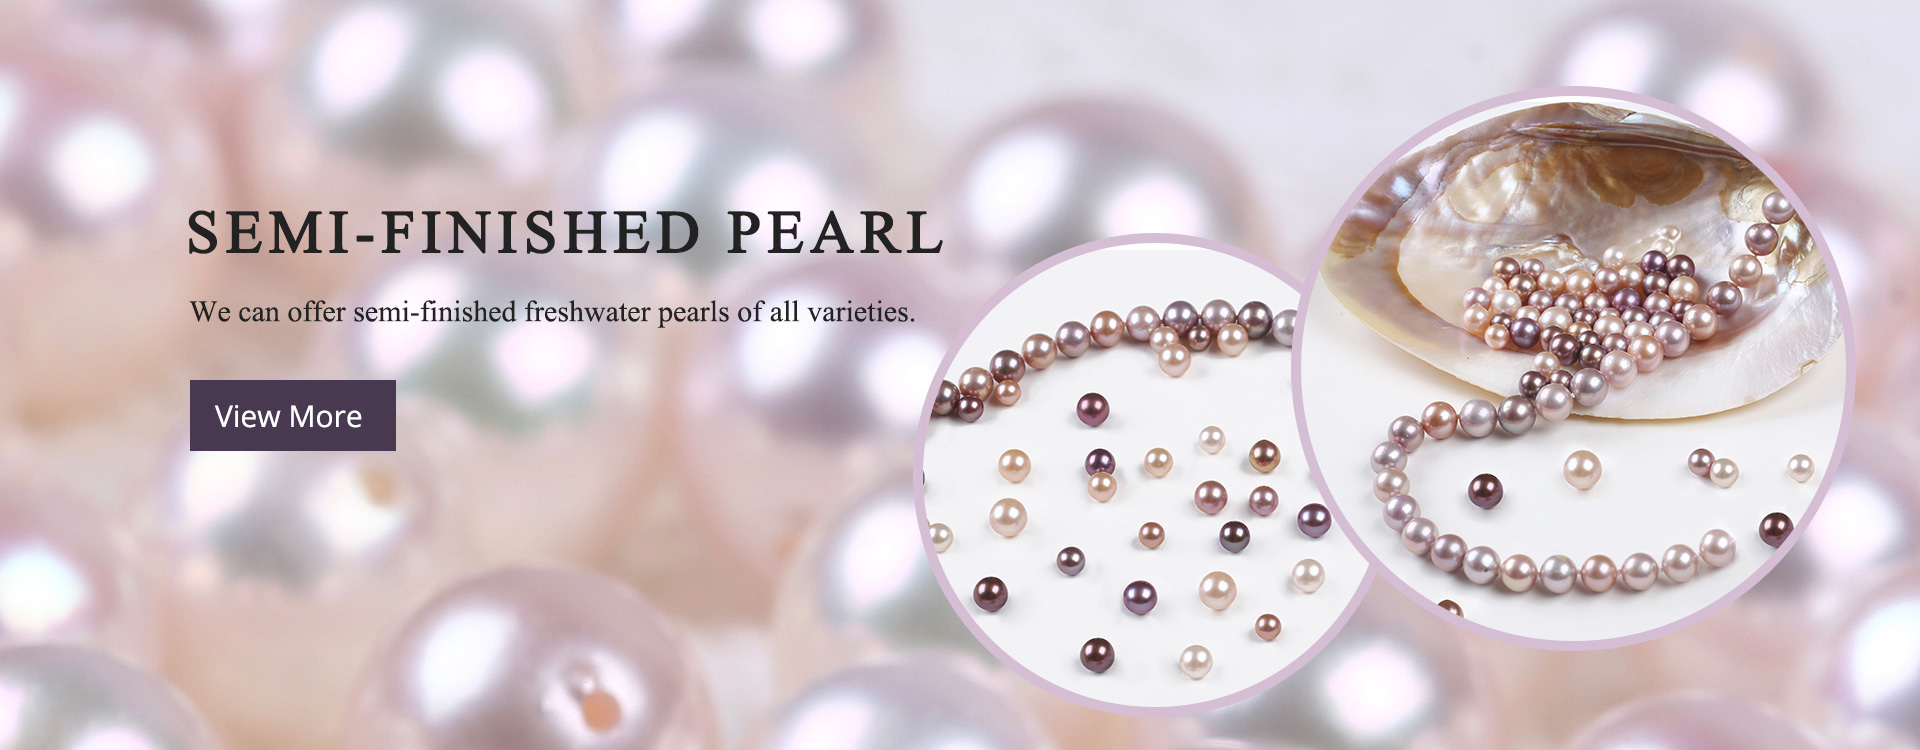 nice qualtiy round pearl